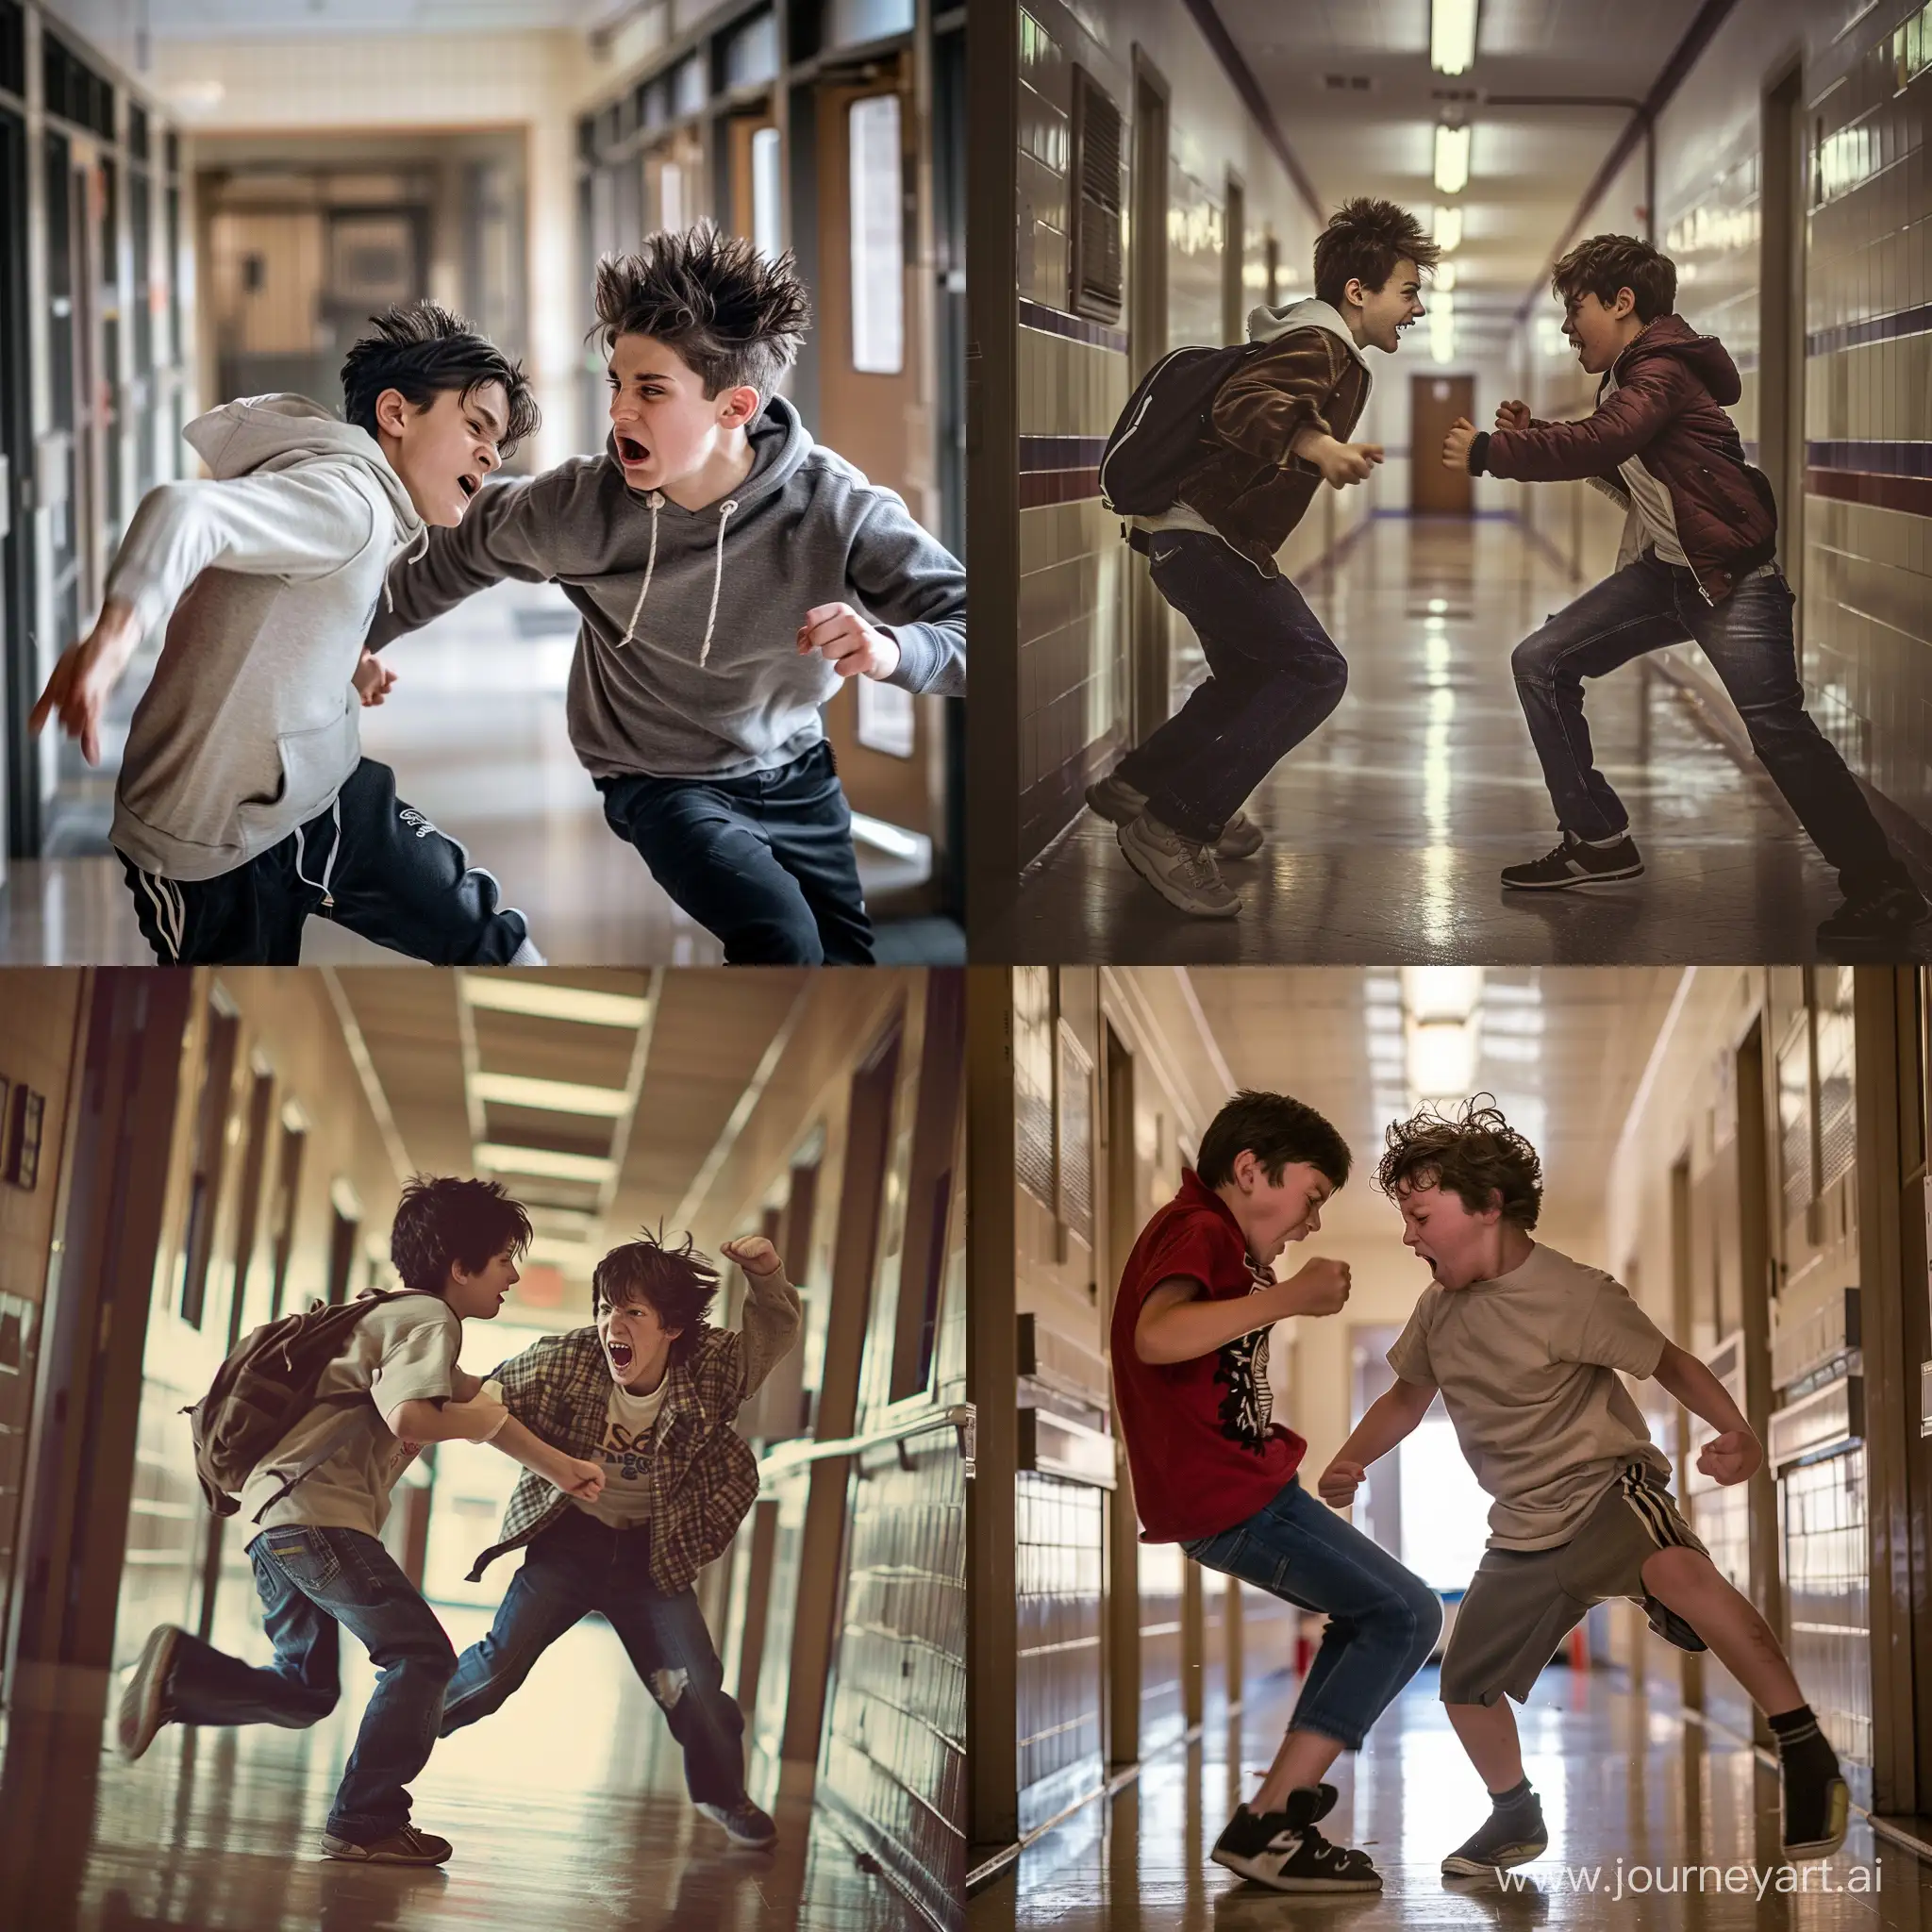 Intense-Schoolyard-Clash-Two-Boys-Engaged-in-a-Fierce-Fight